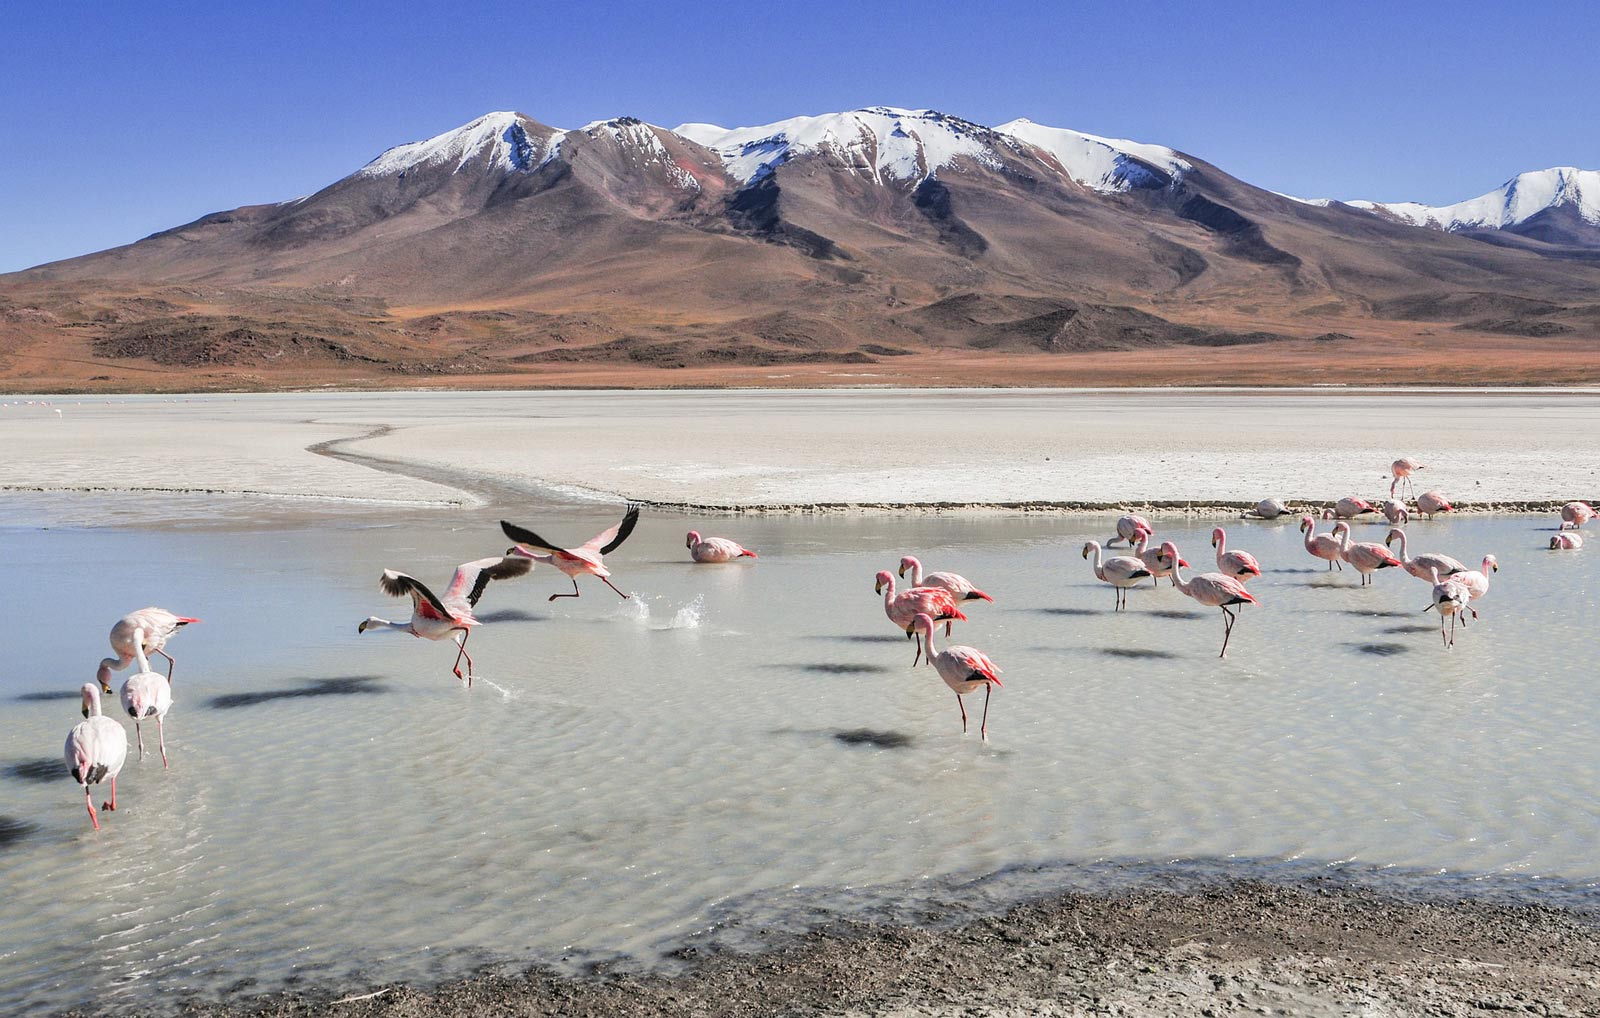 Bolivia Salt Flats are beautiful